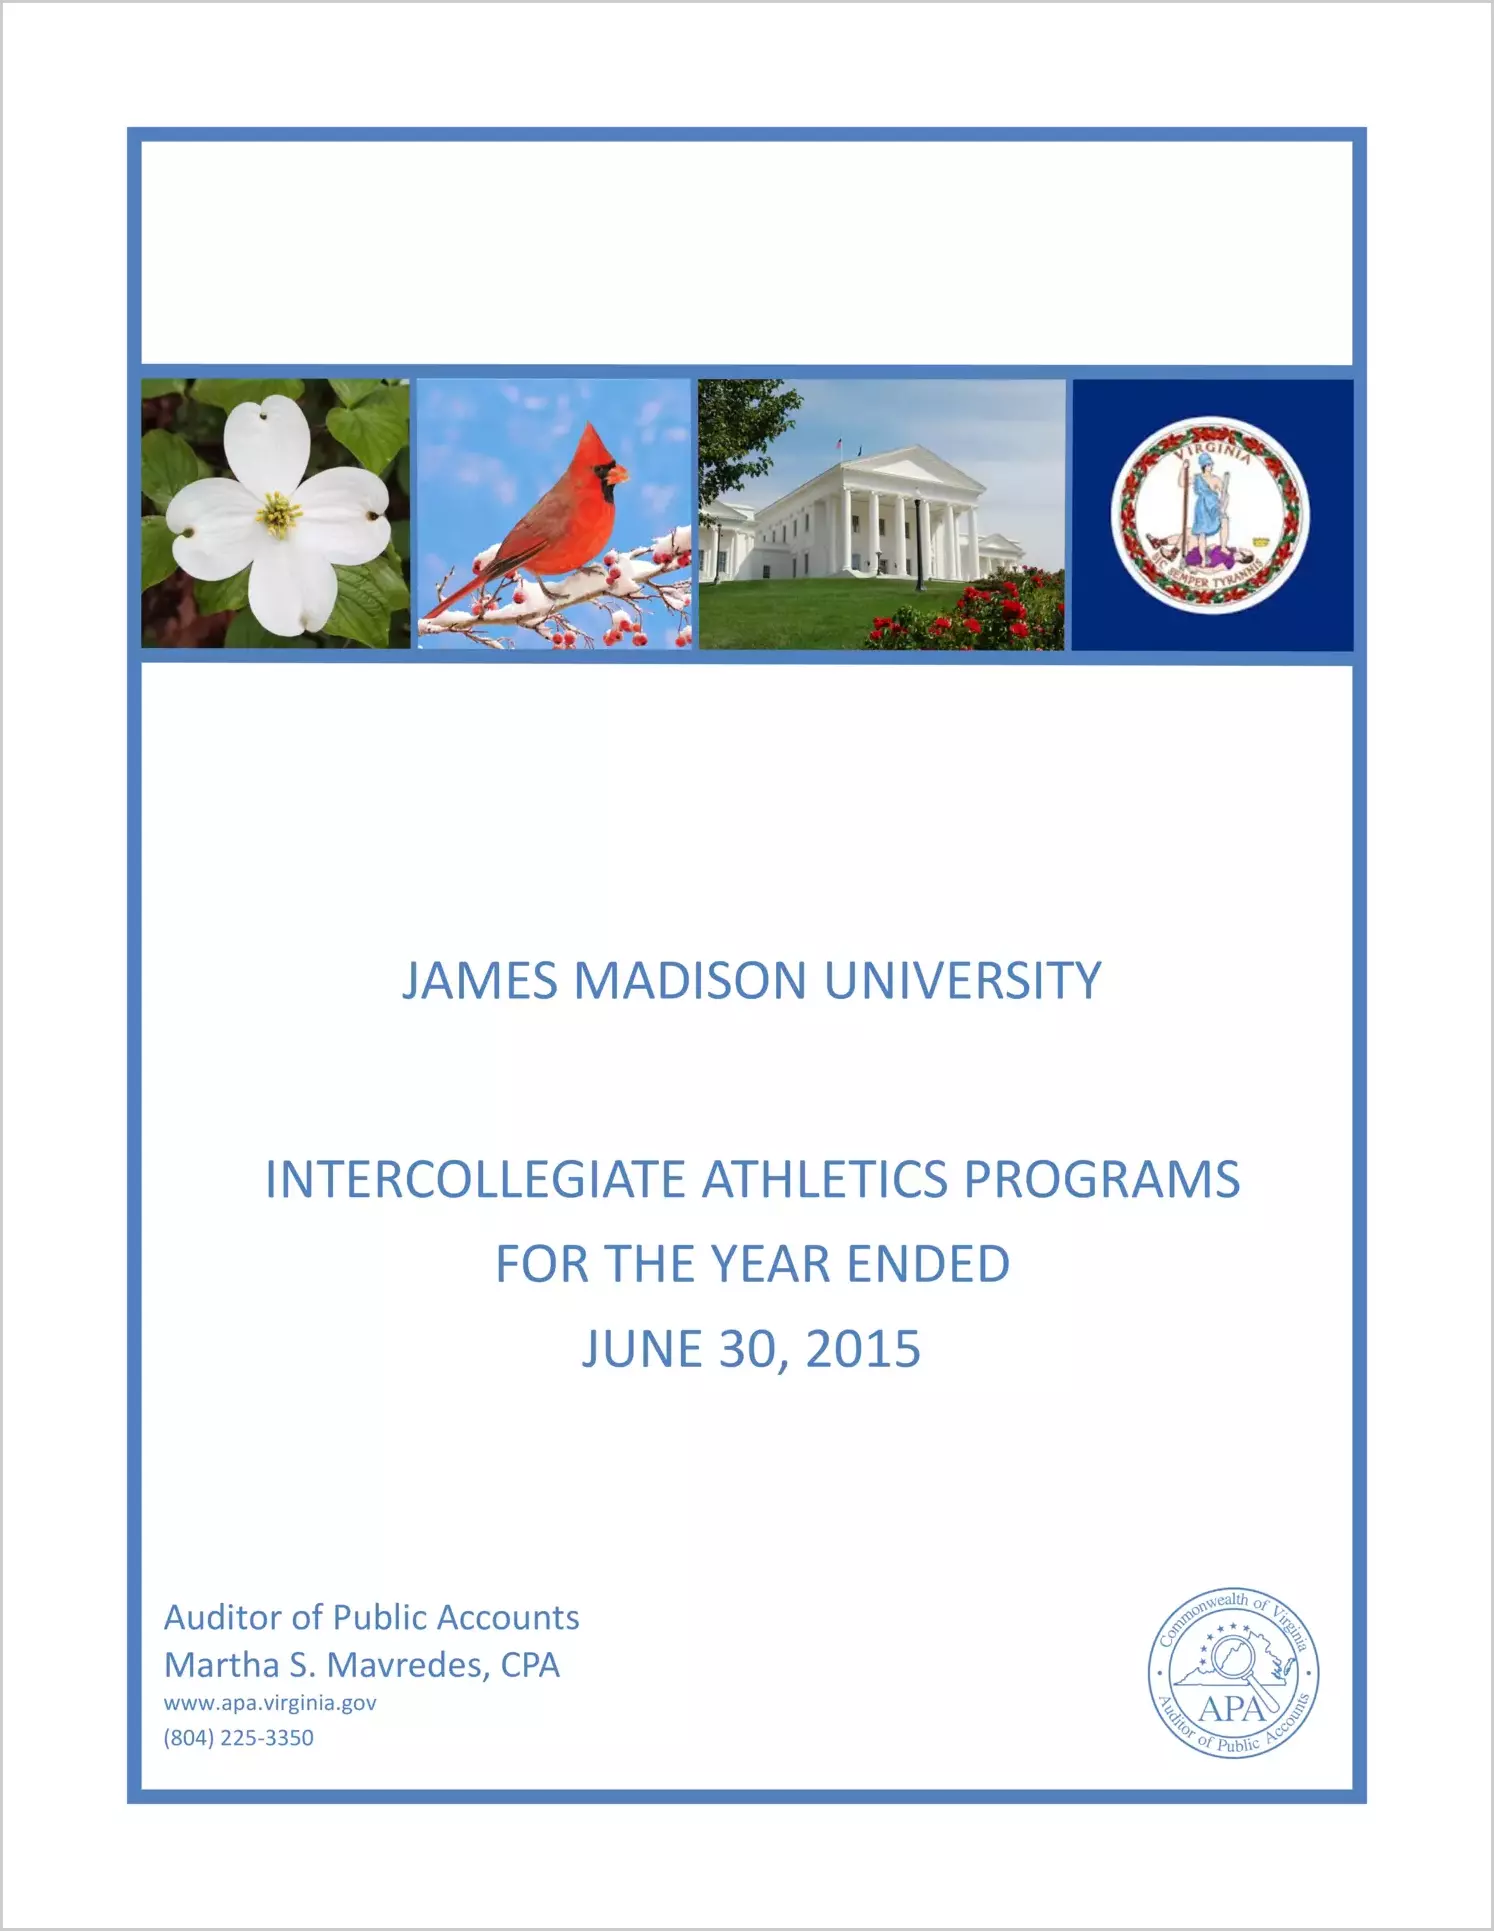 James Madison University Intercollegiate Athletics Programs for the year ended June 30, 2015